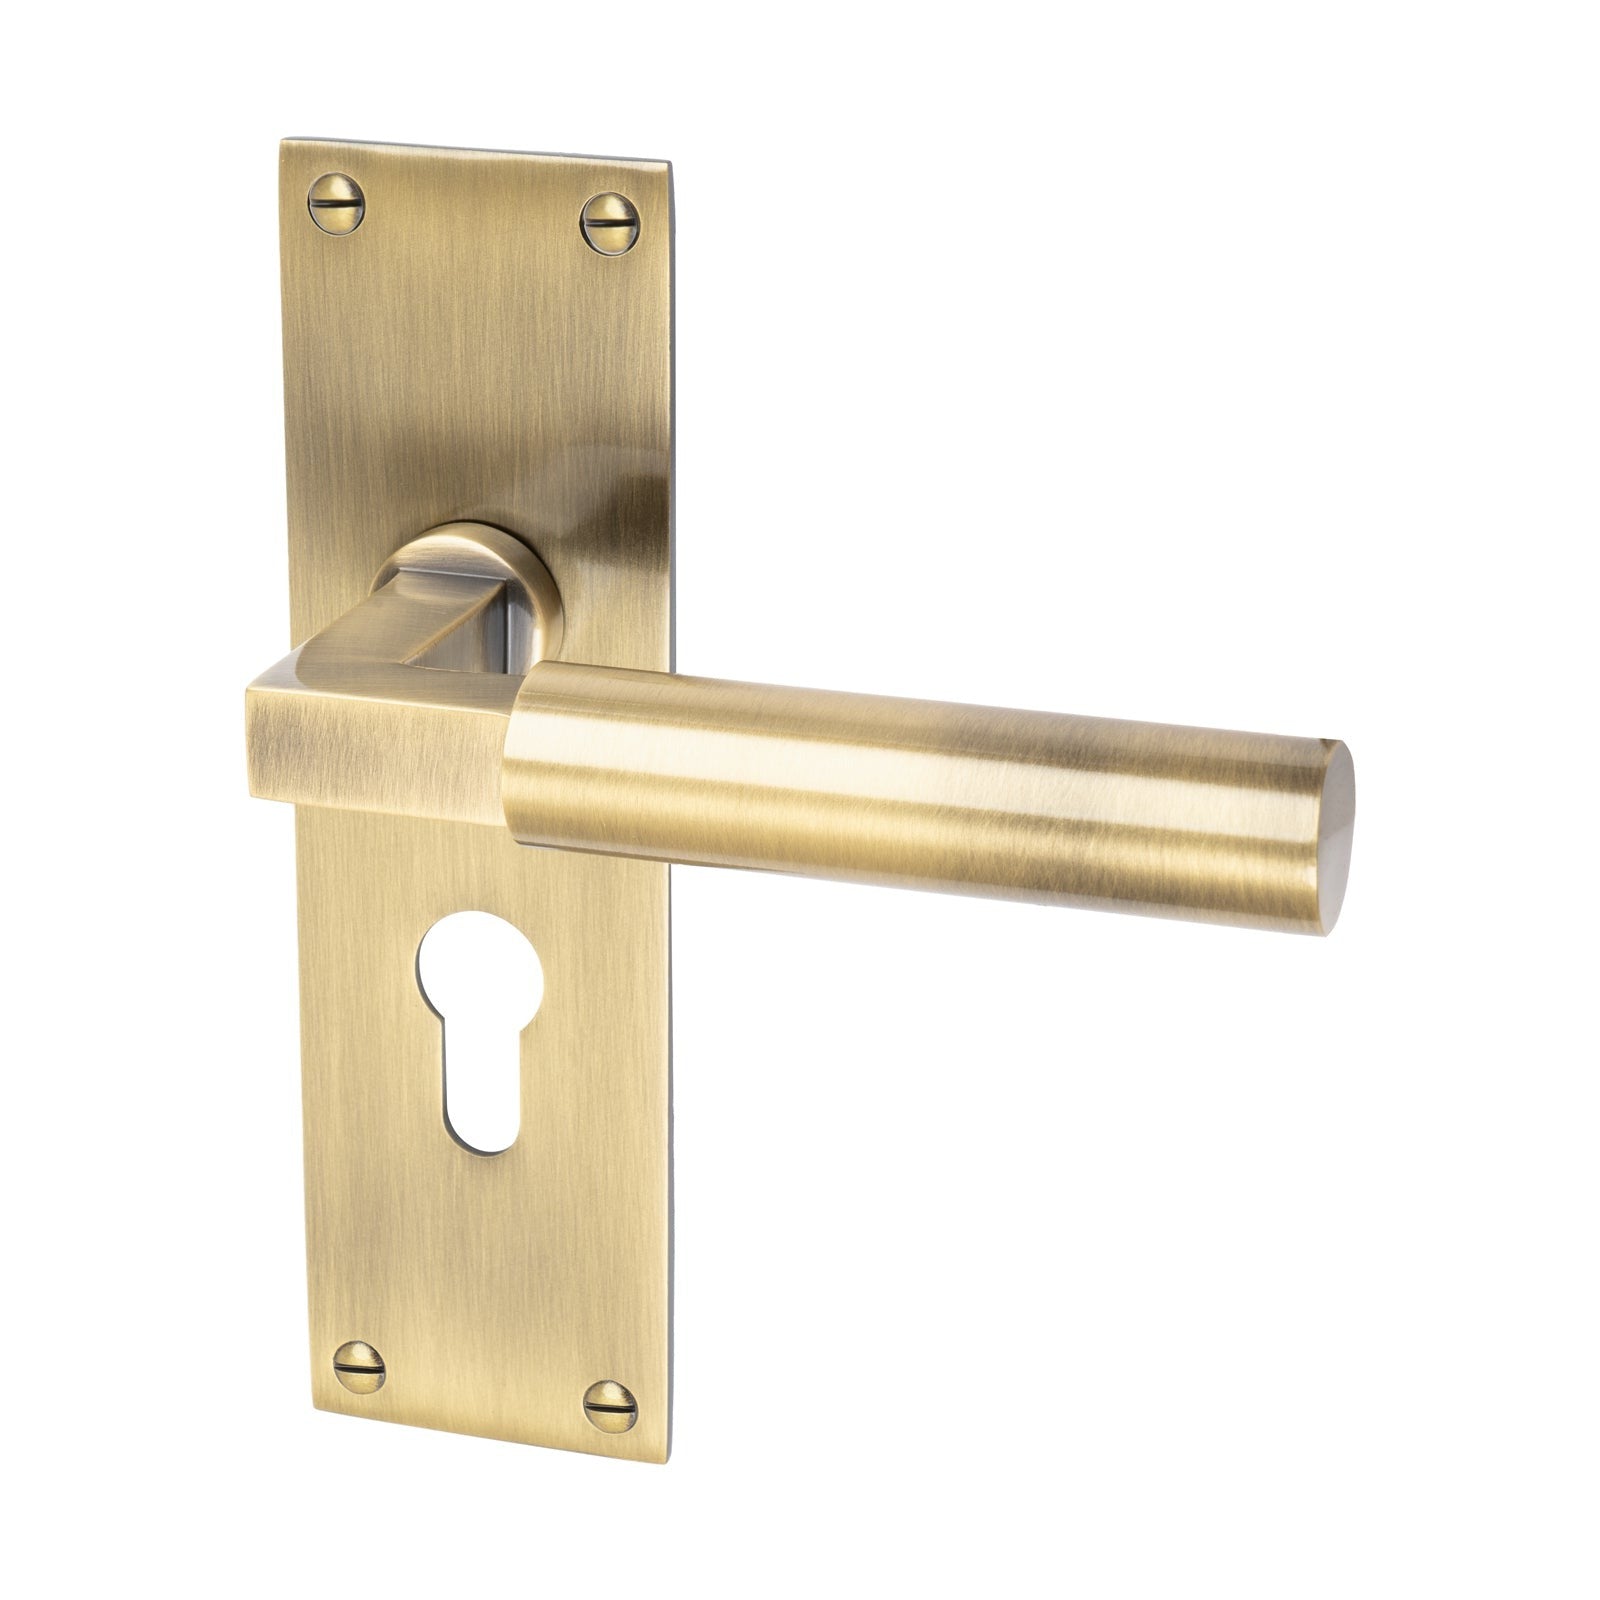 Bauhaus Door Handles On Plate Euro Lock Handle in Aged Brass 